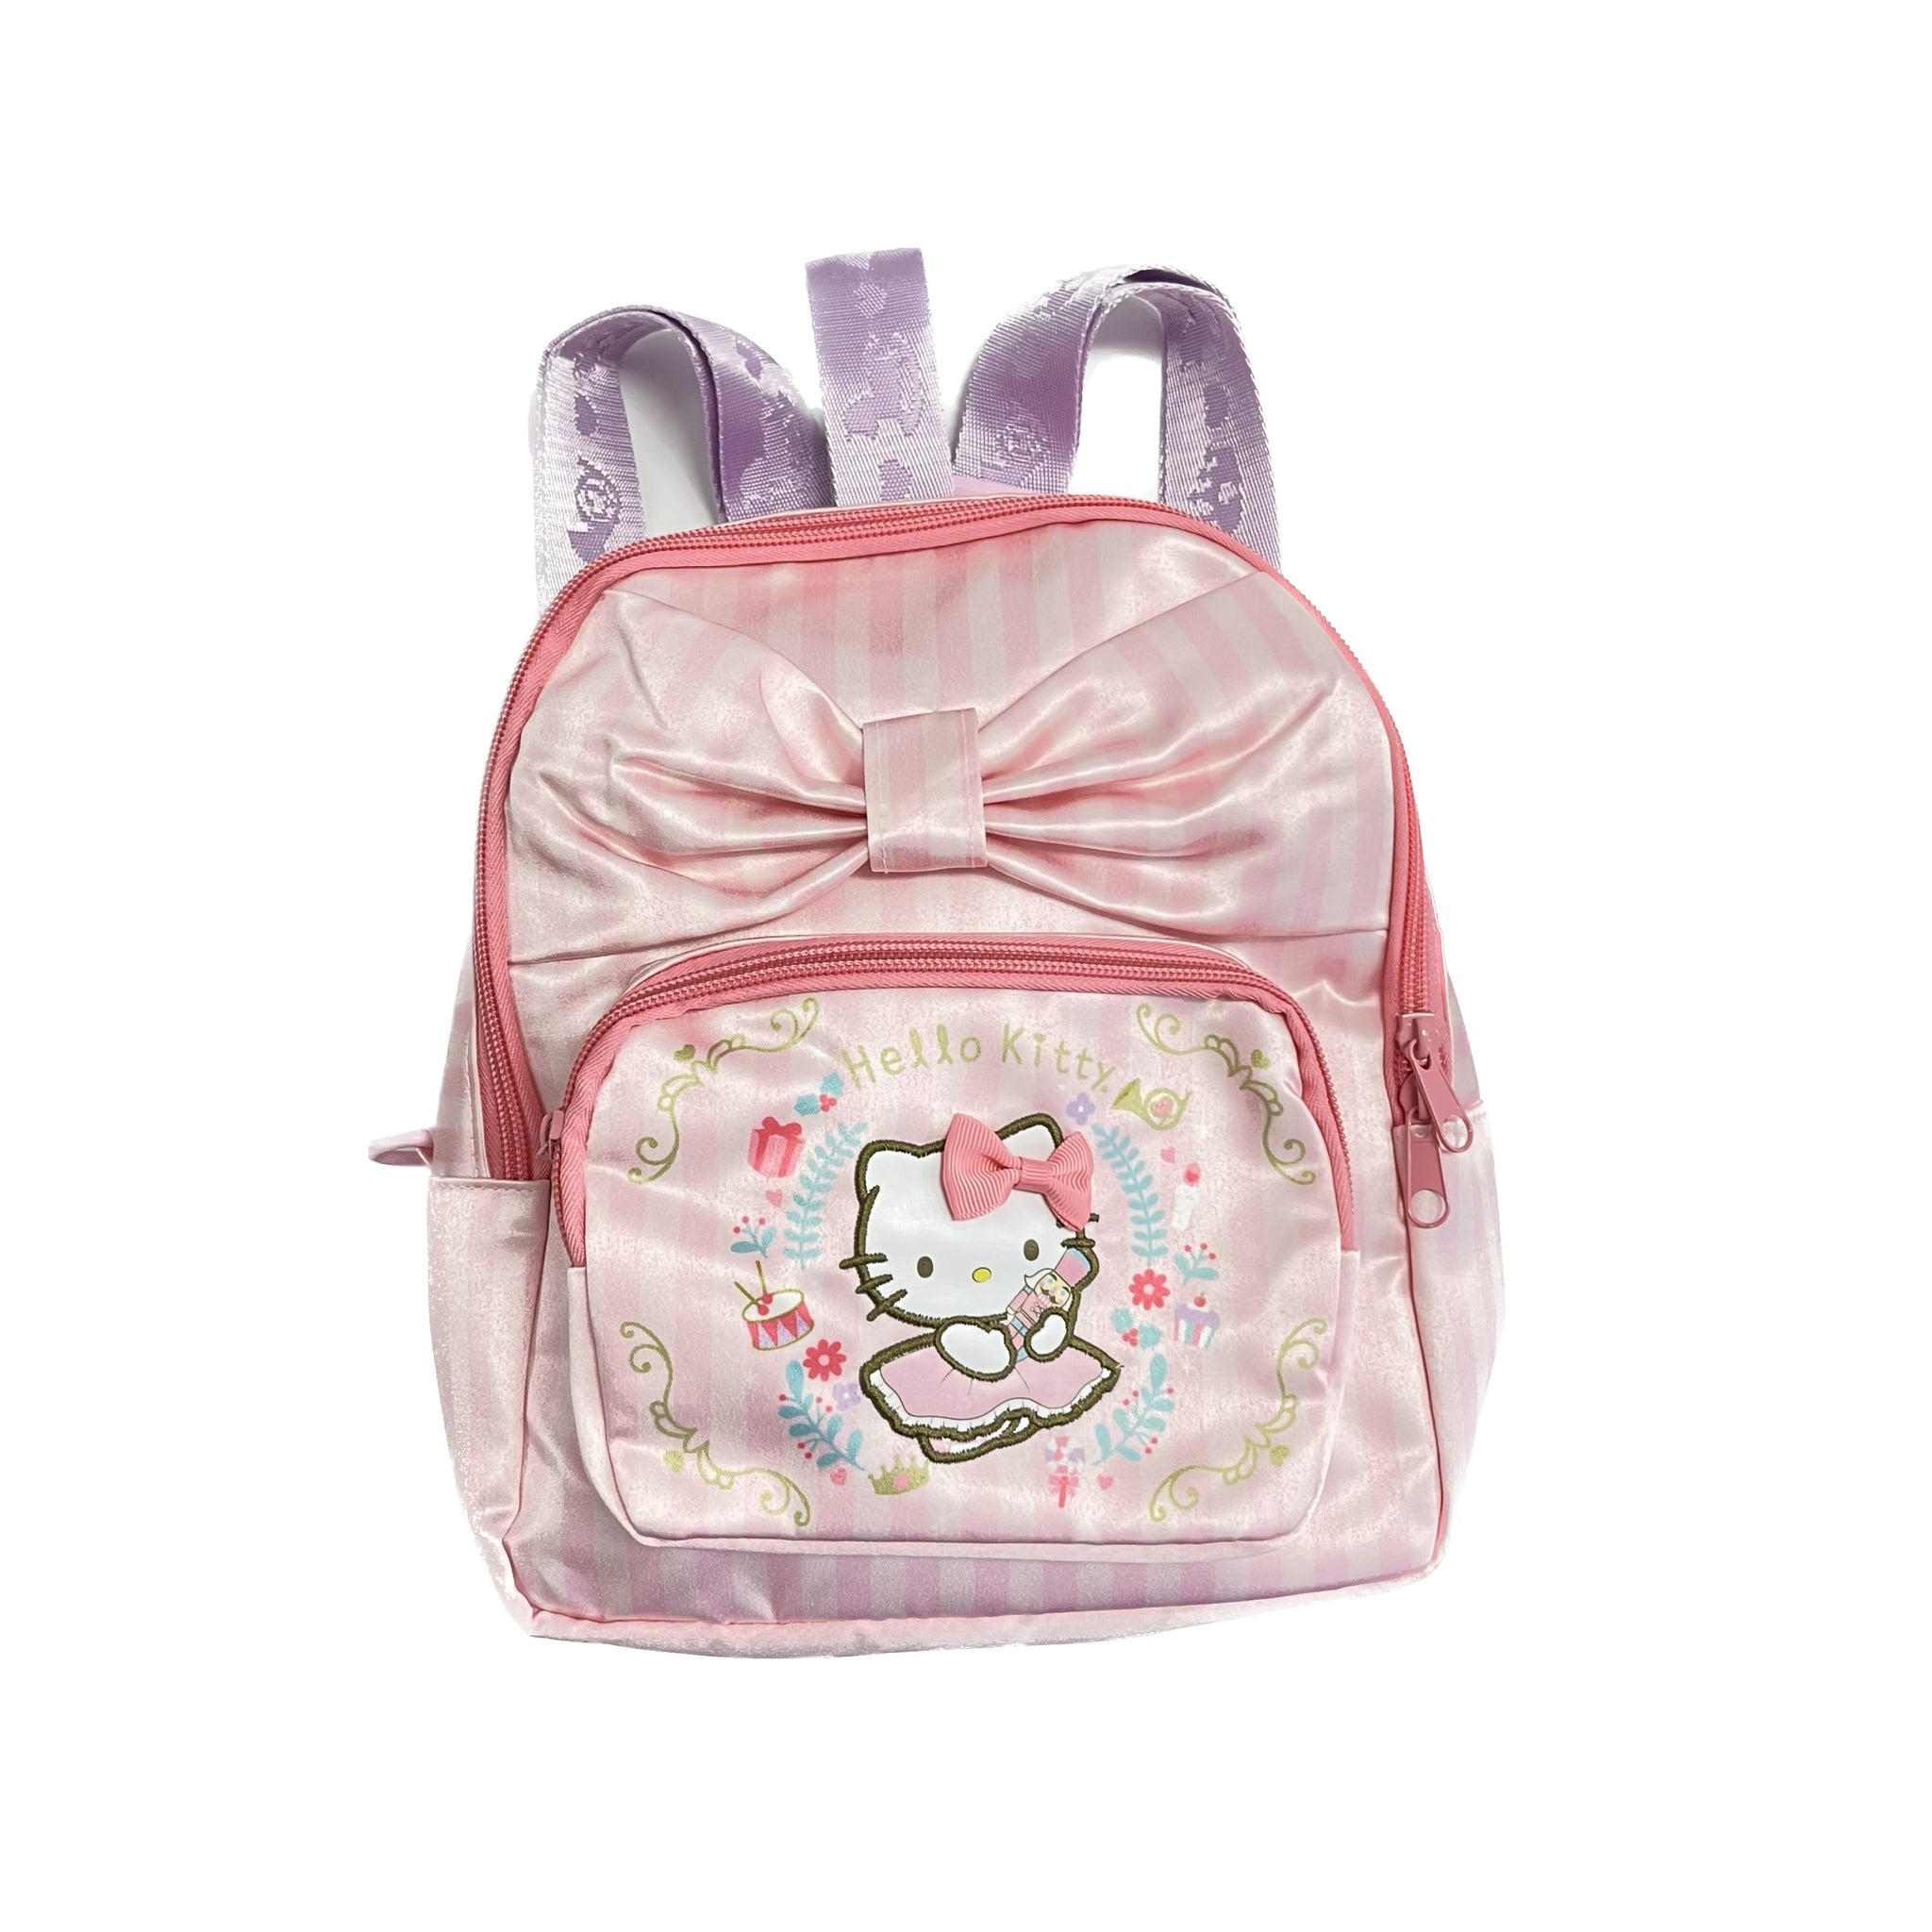 SANRIO Hello Kitty Mini Backpack Shoulder Bag Black Ships from Japan | eBay